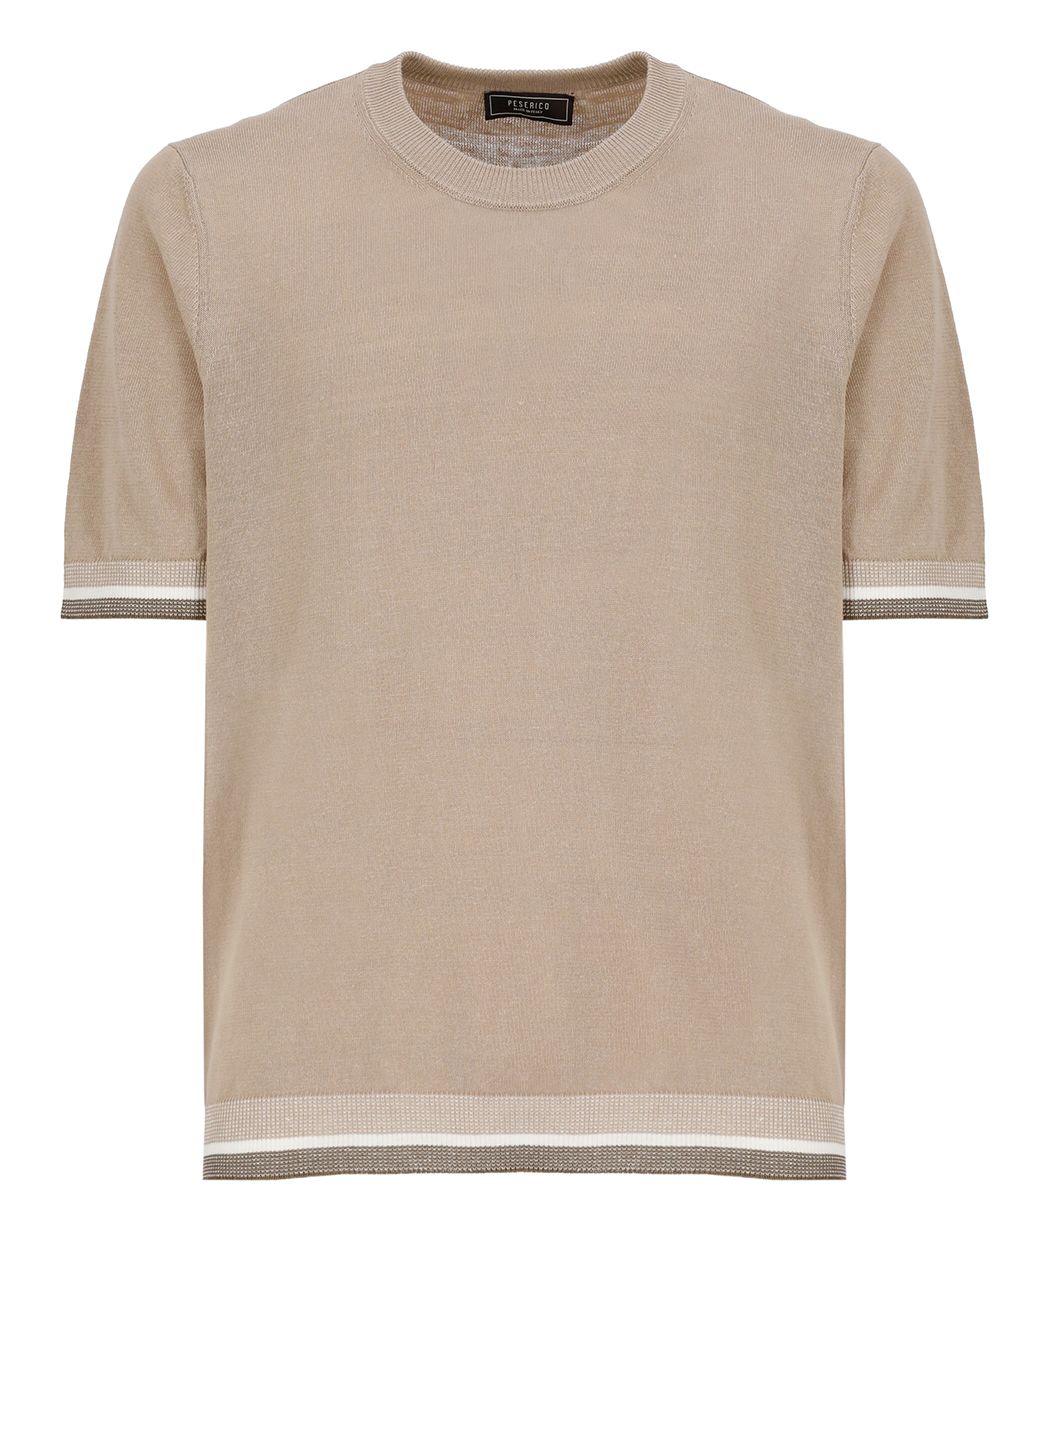 Linen and cotton t-shirt